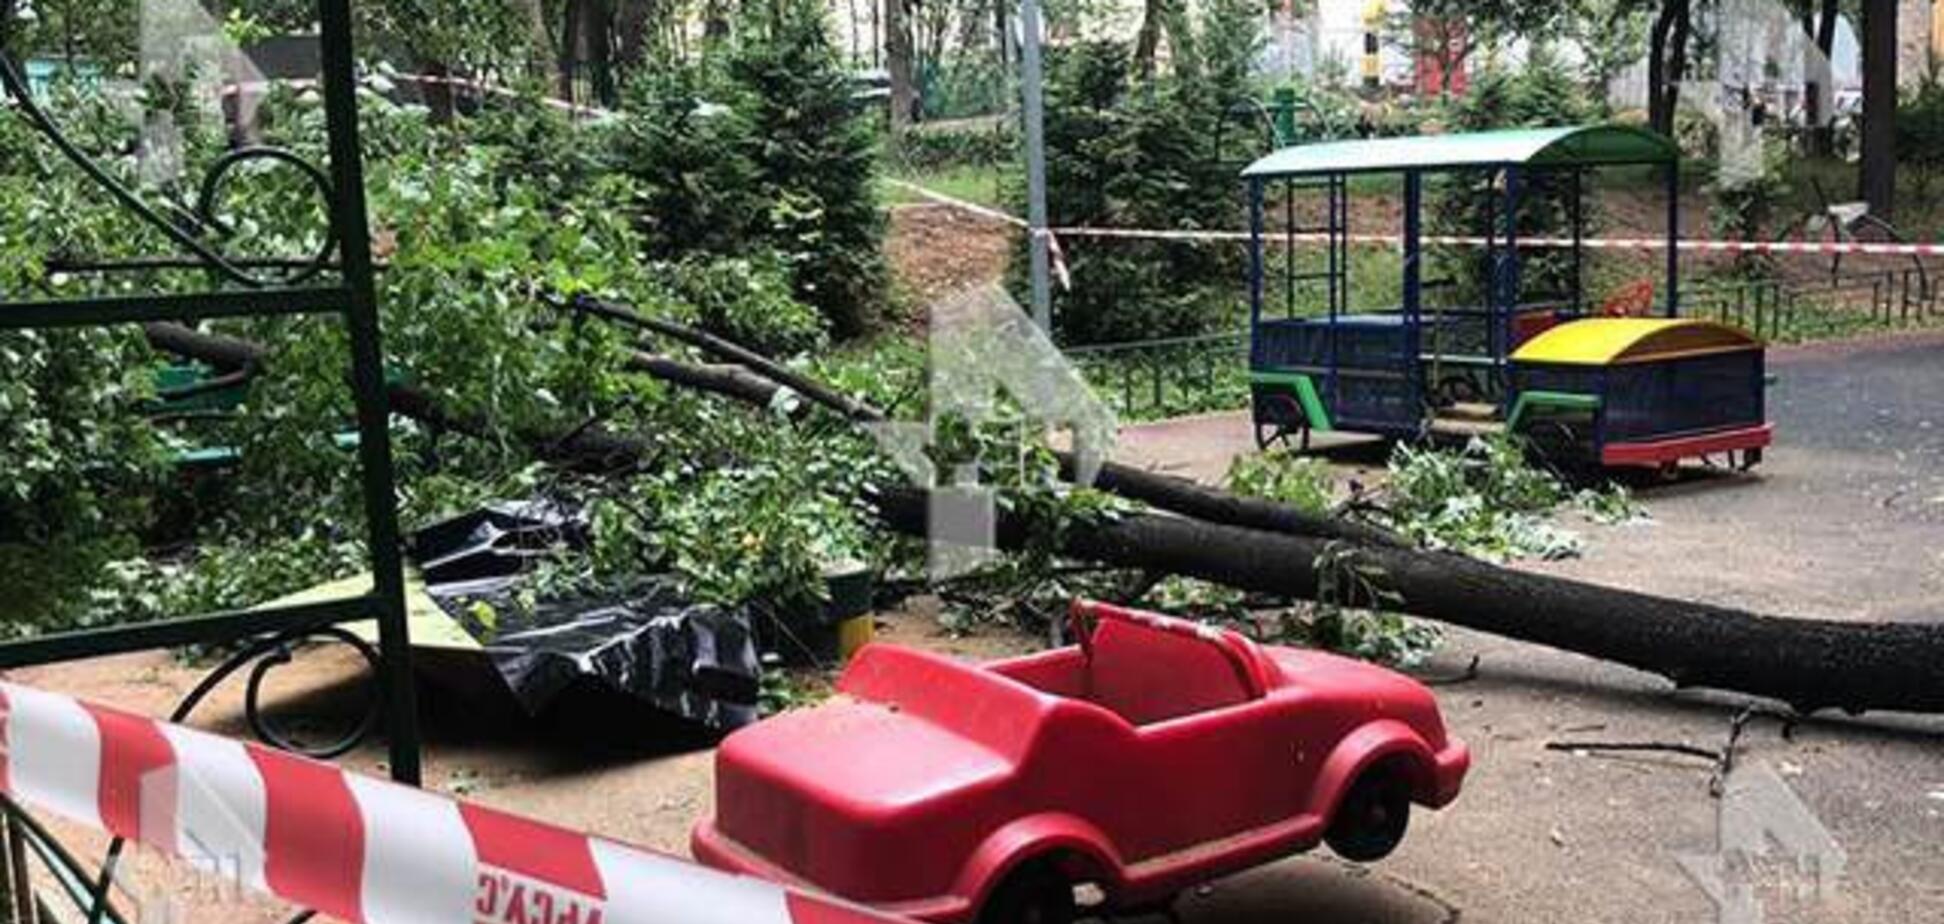 На глазах у матери: в Москве упавшее дерево убило ребенка. Видео 18+